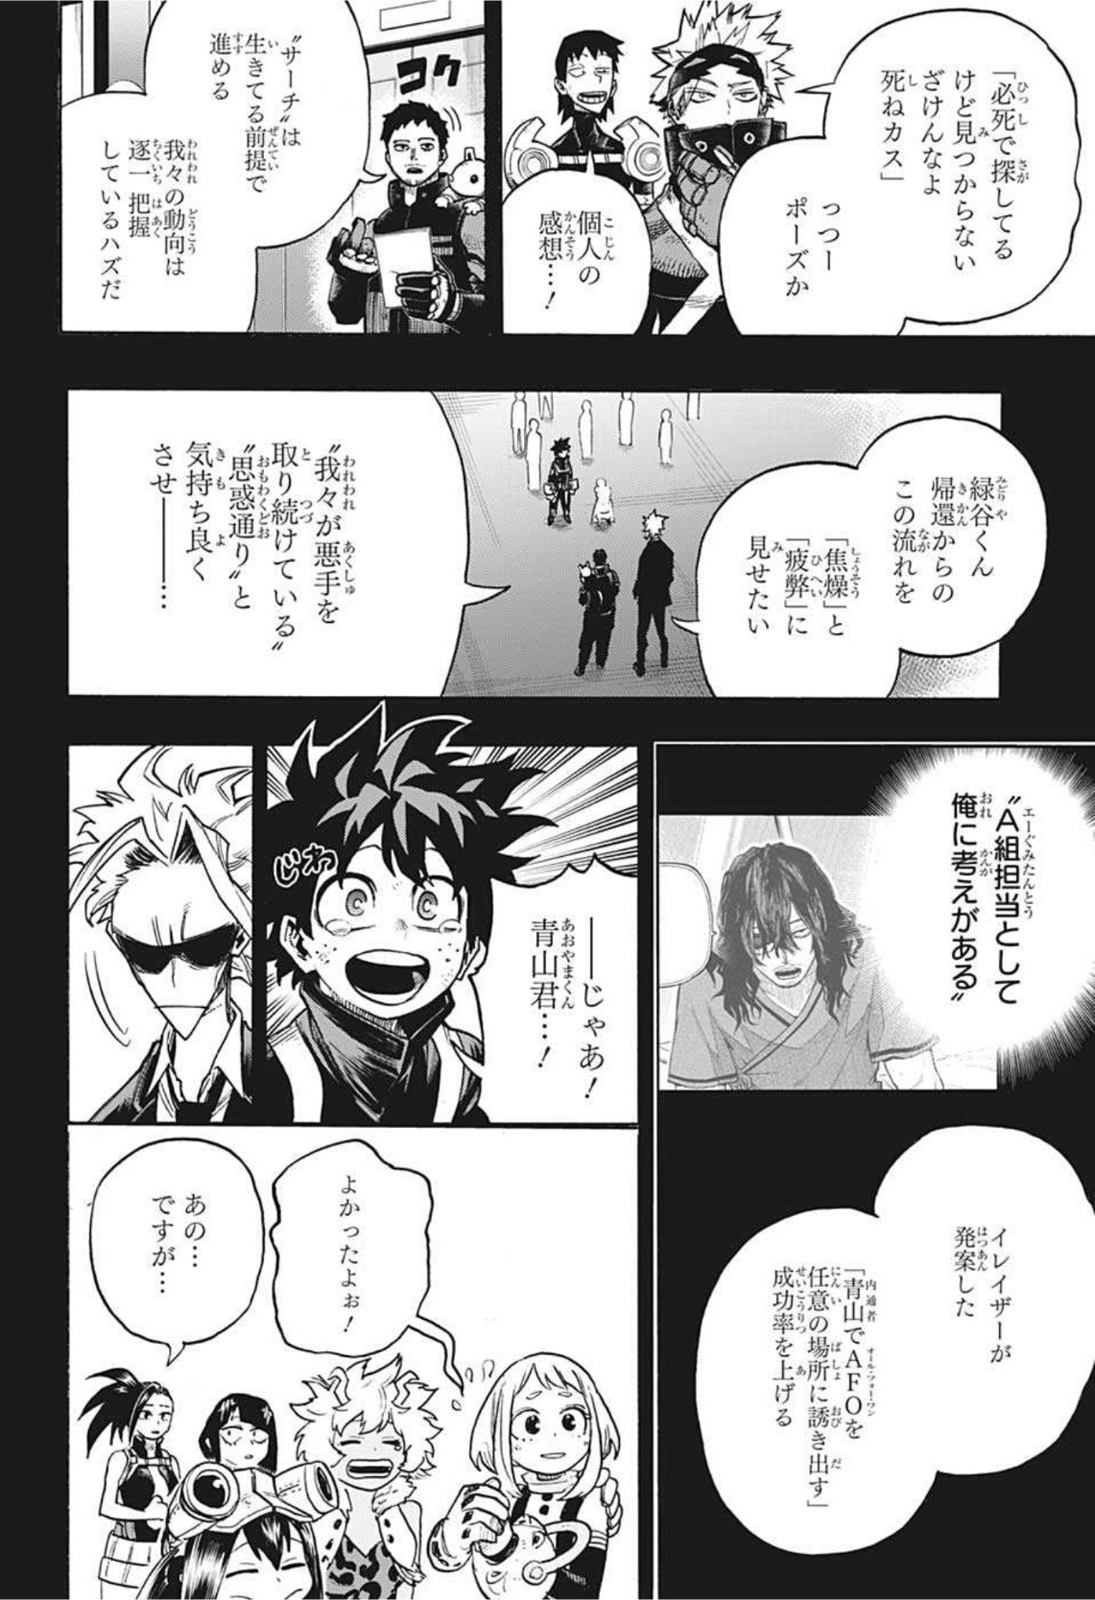 Boku no Hero Academia - Chapter 344 - Page 2